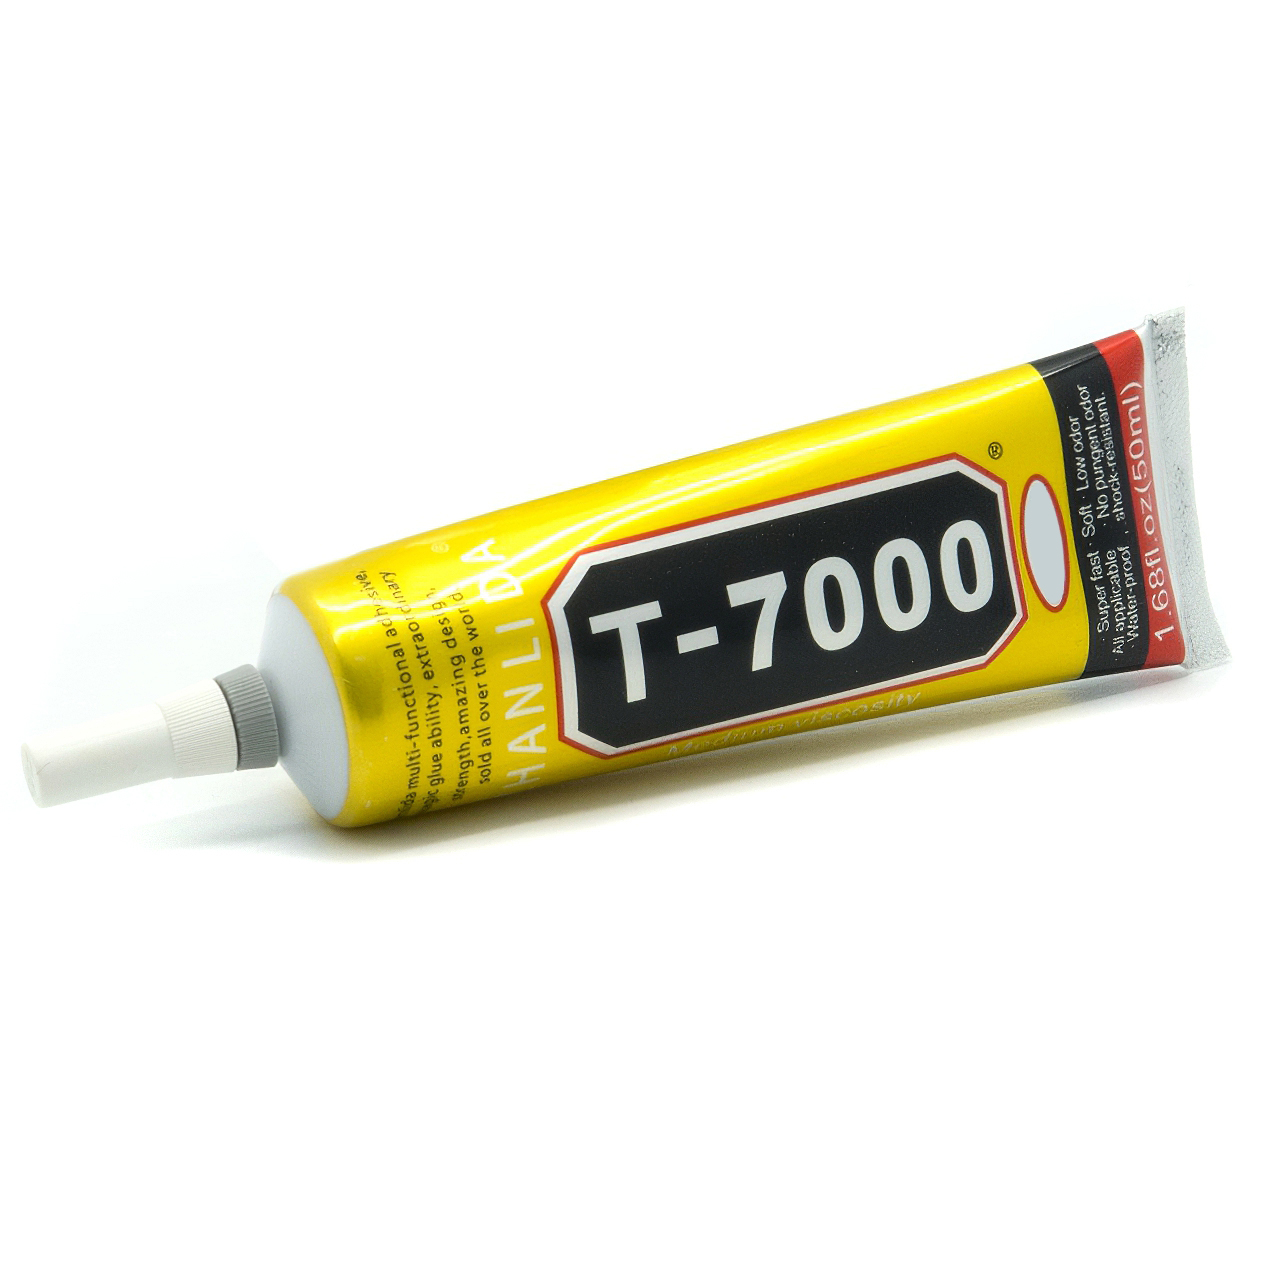 zhanlida-cellphone-repair-adhesives-t-7000-2C-50ml-2C-black